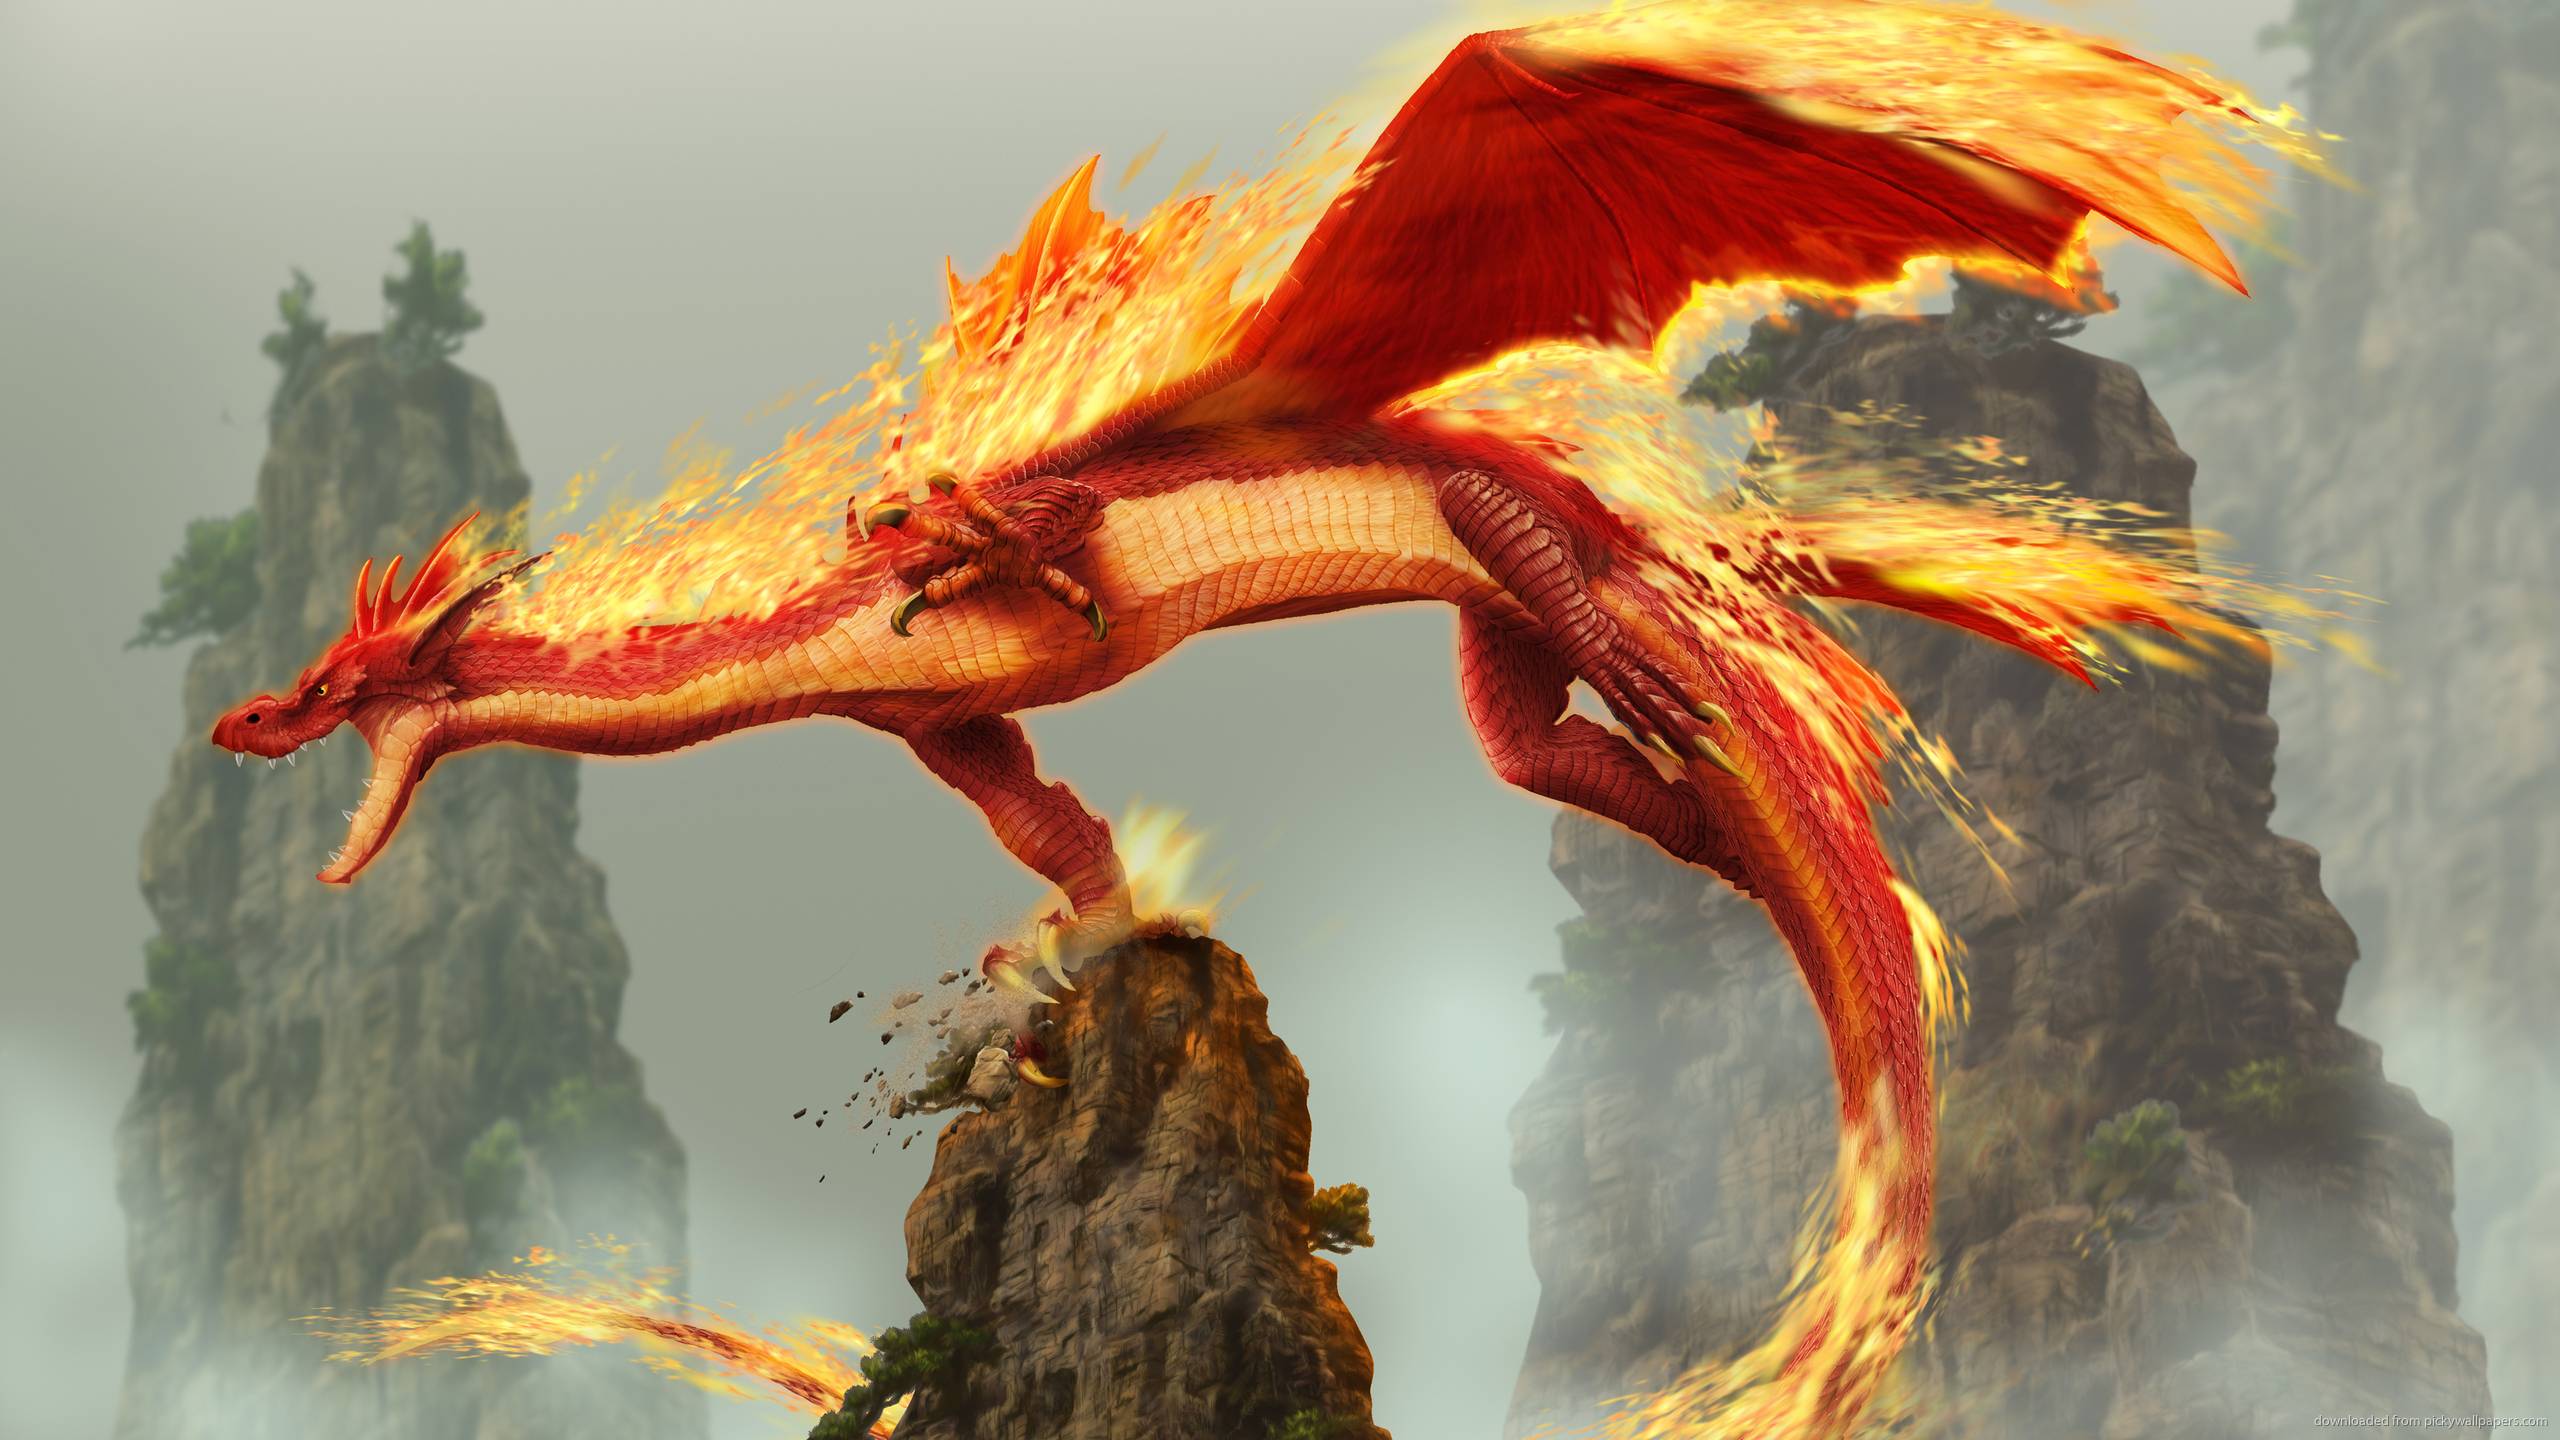 Download 2560x1440 Fire Dragon Wallpaper